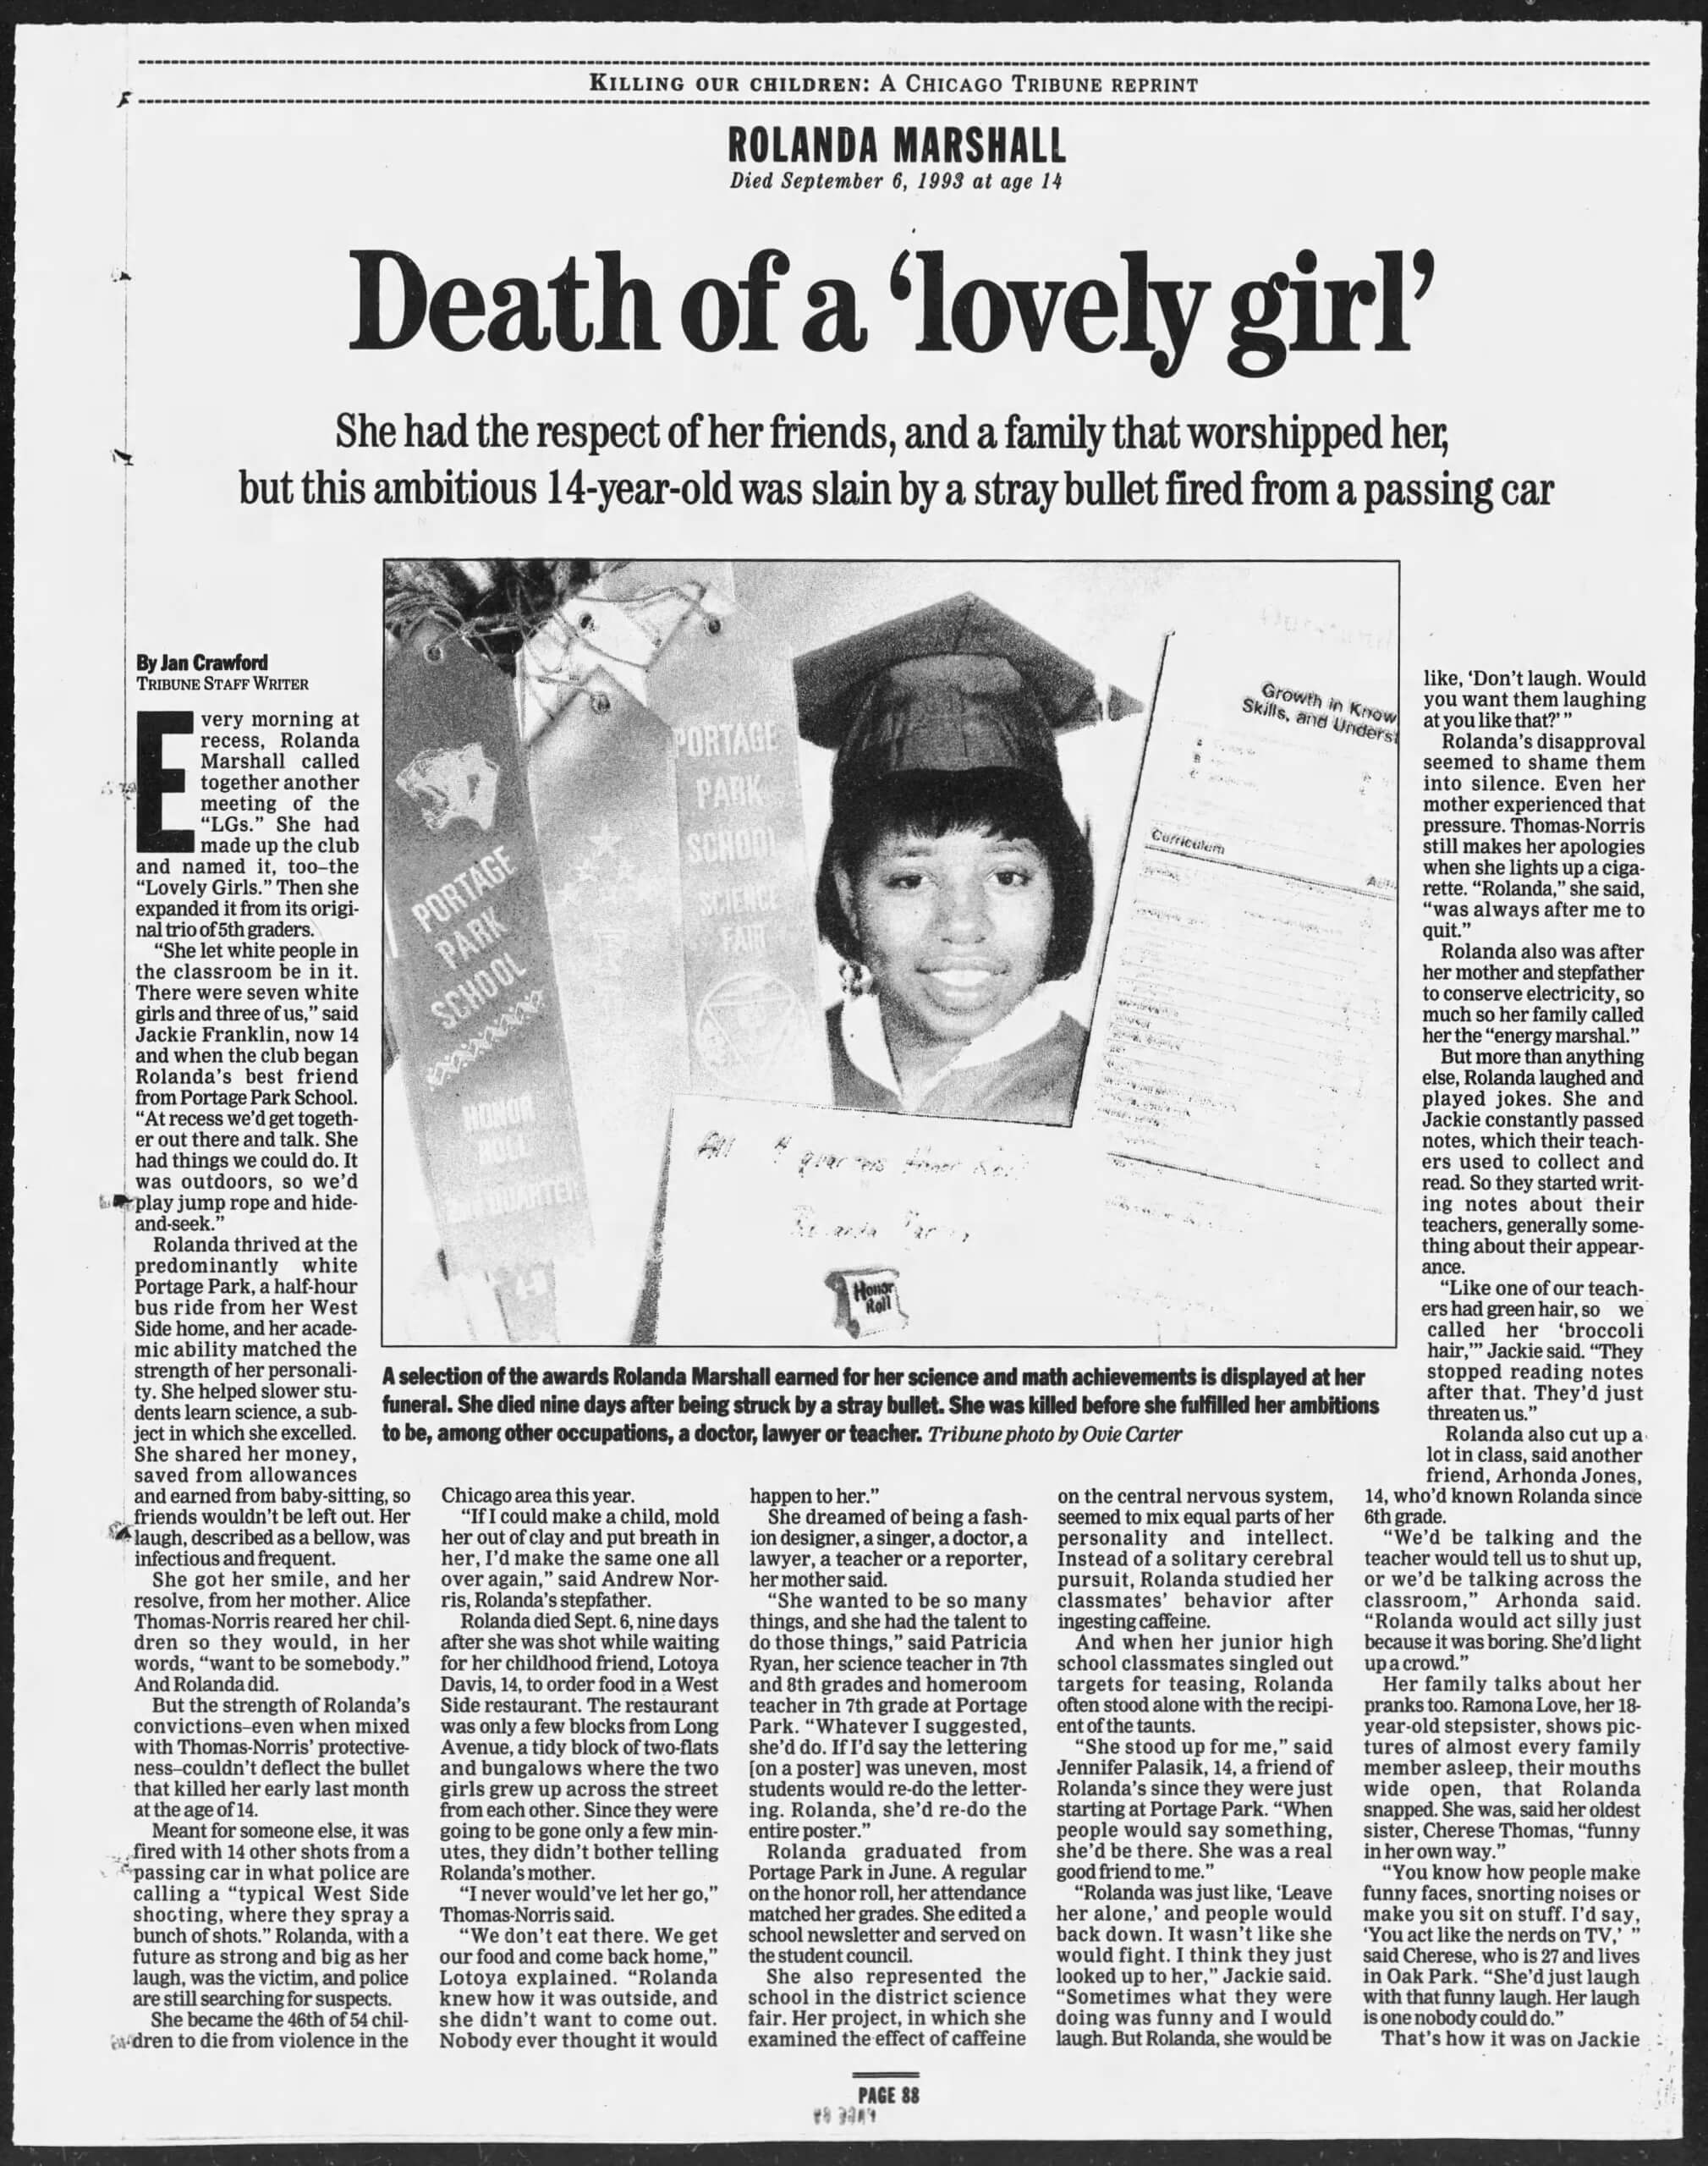 rolanda marshall kesia unsolved murder cold case 1993 chicago gun violence alice thomas norris